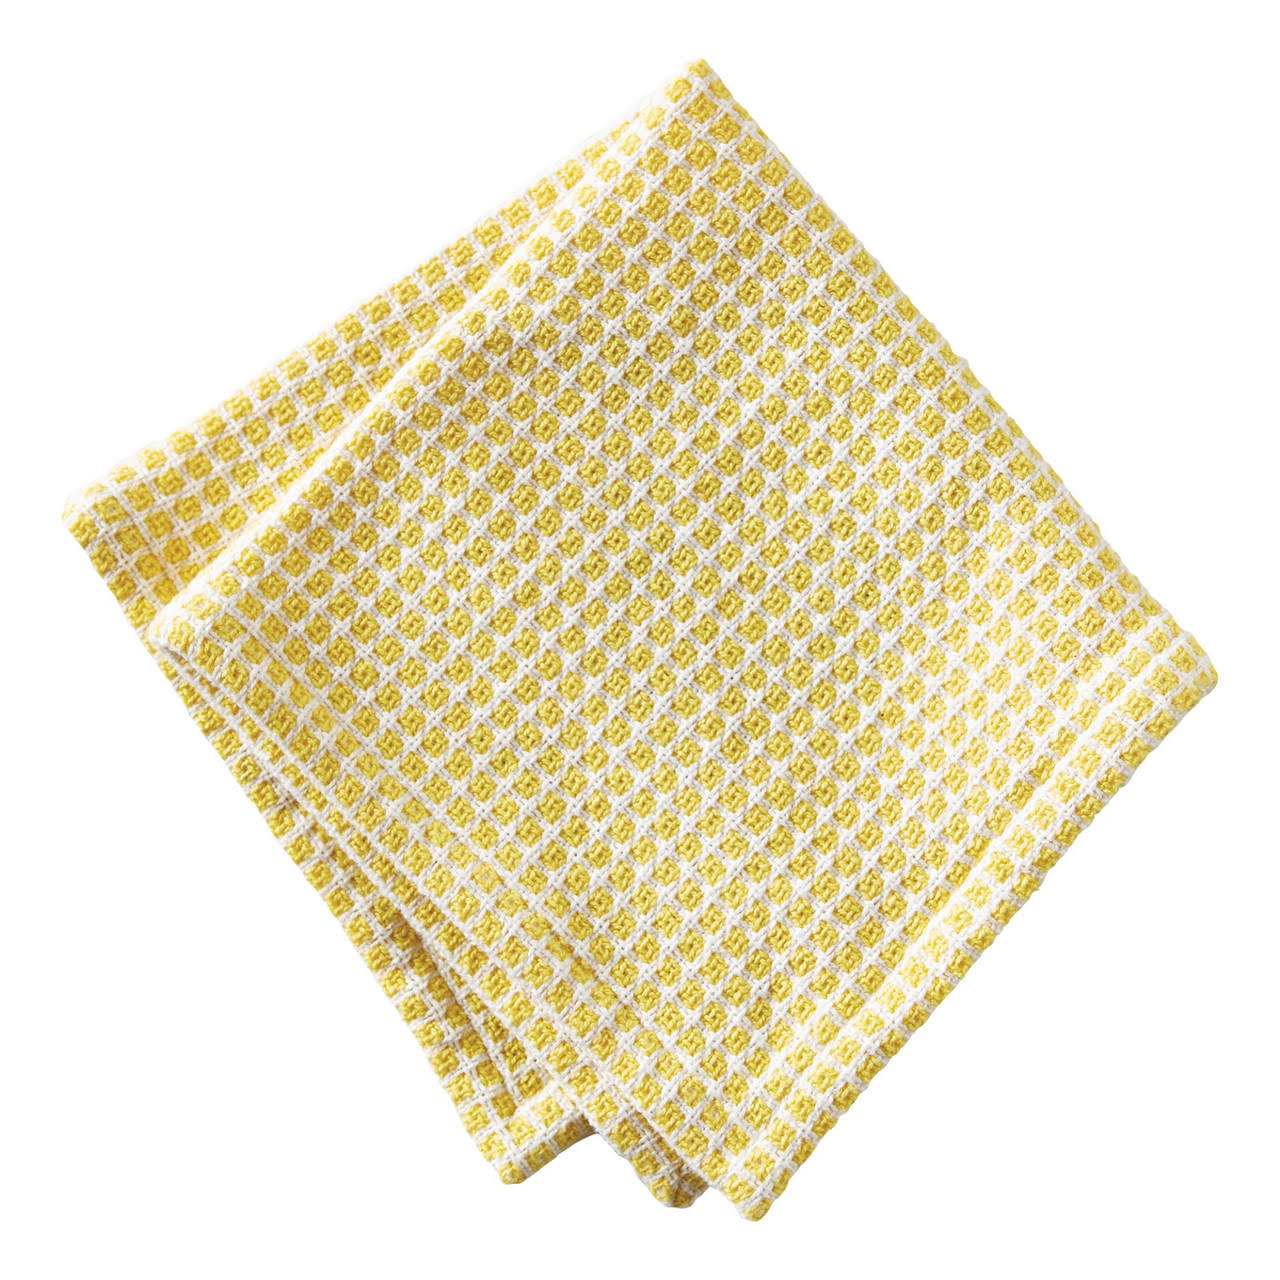 Tag Dishcloths, Textured Check, Yellow